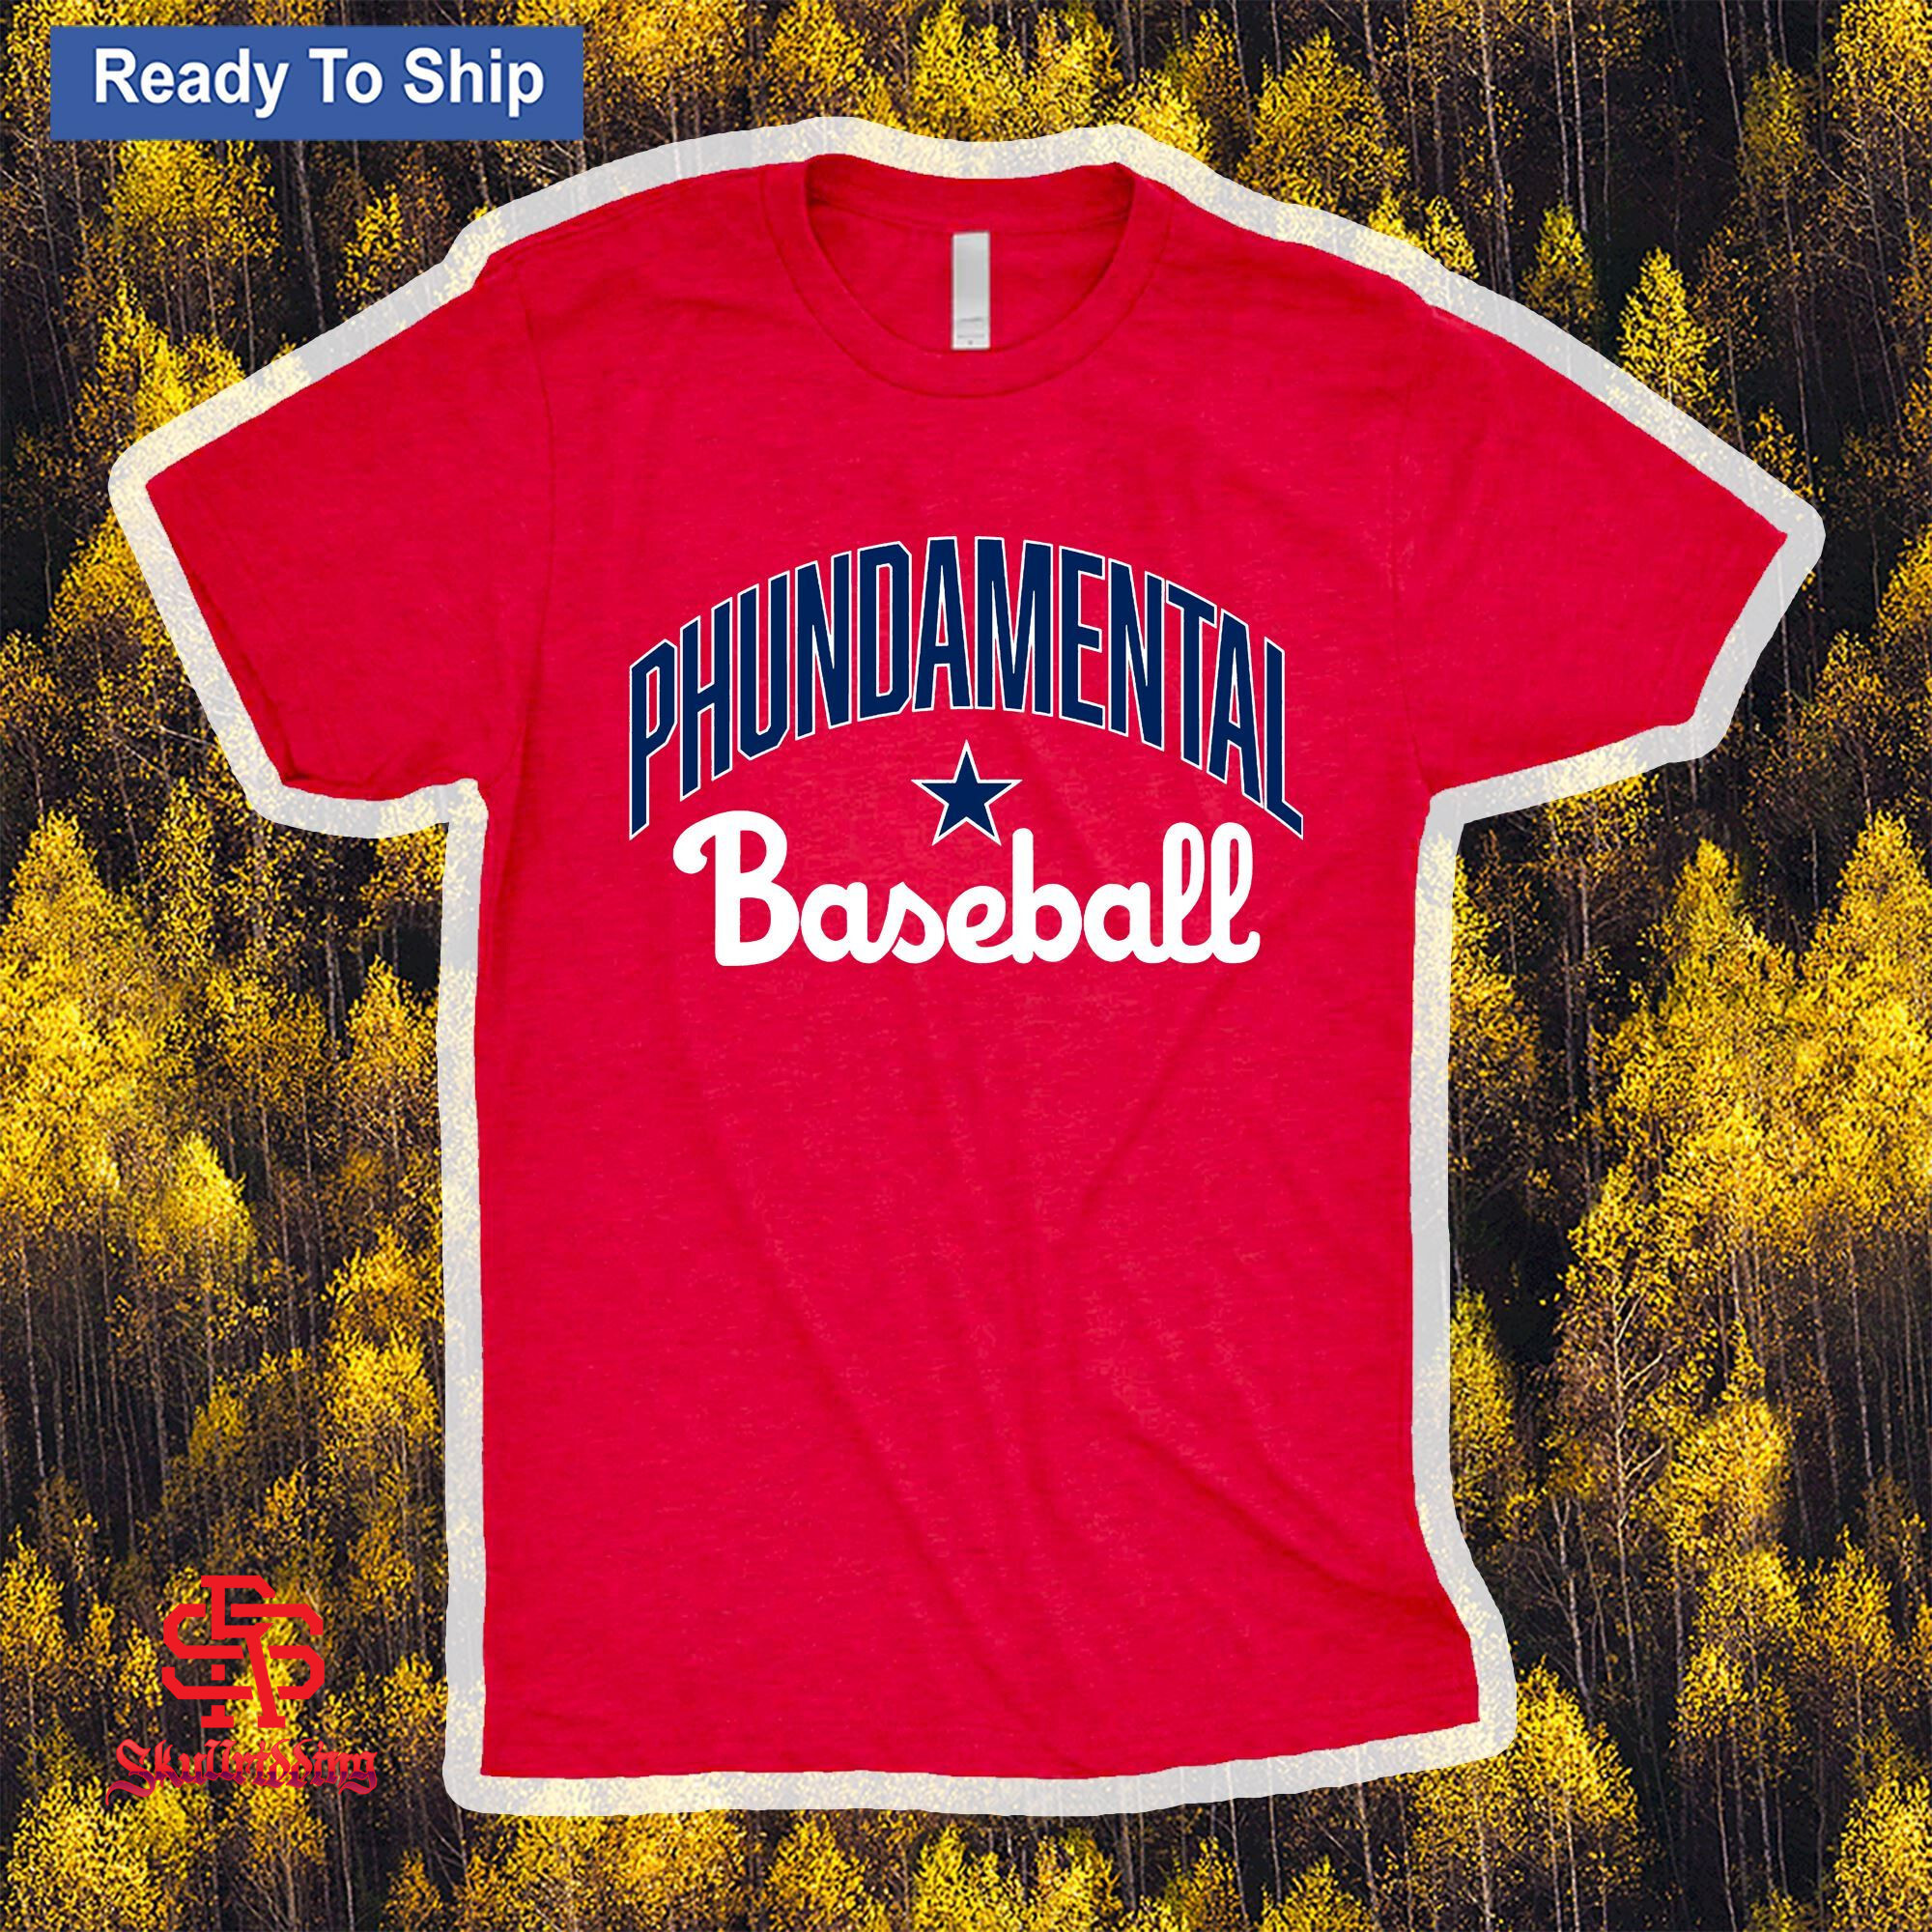 Phundamentals T-Shirt - Philadelphia Phillies